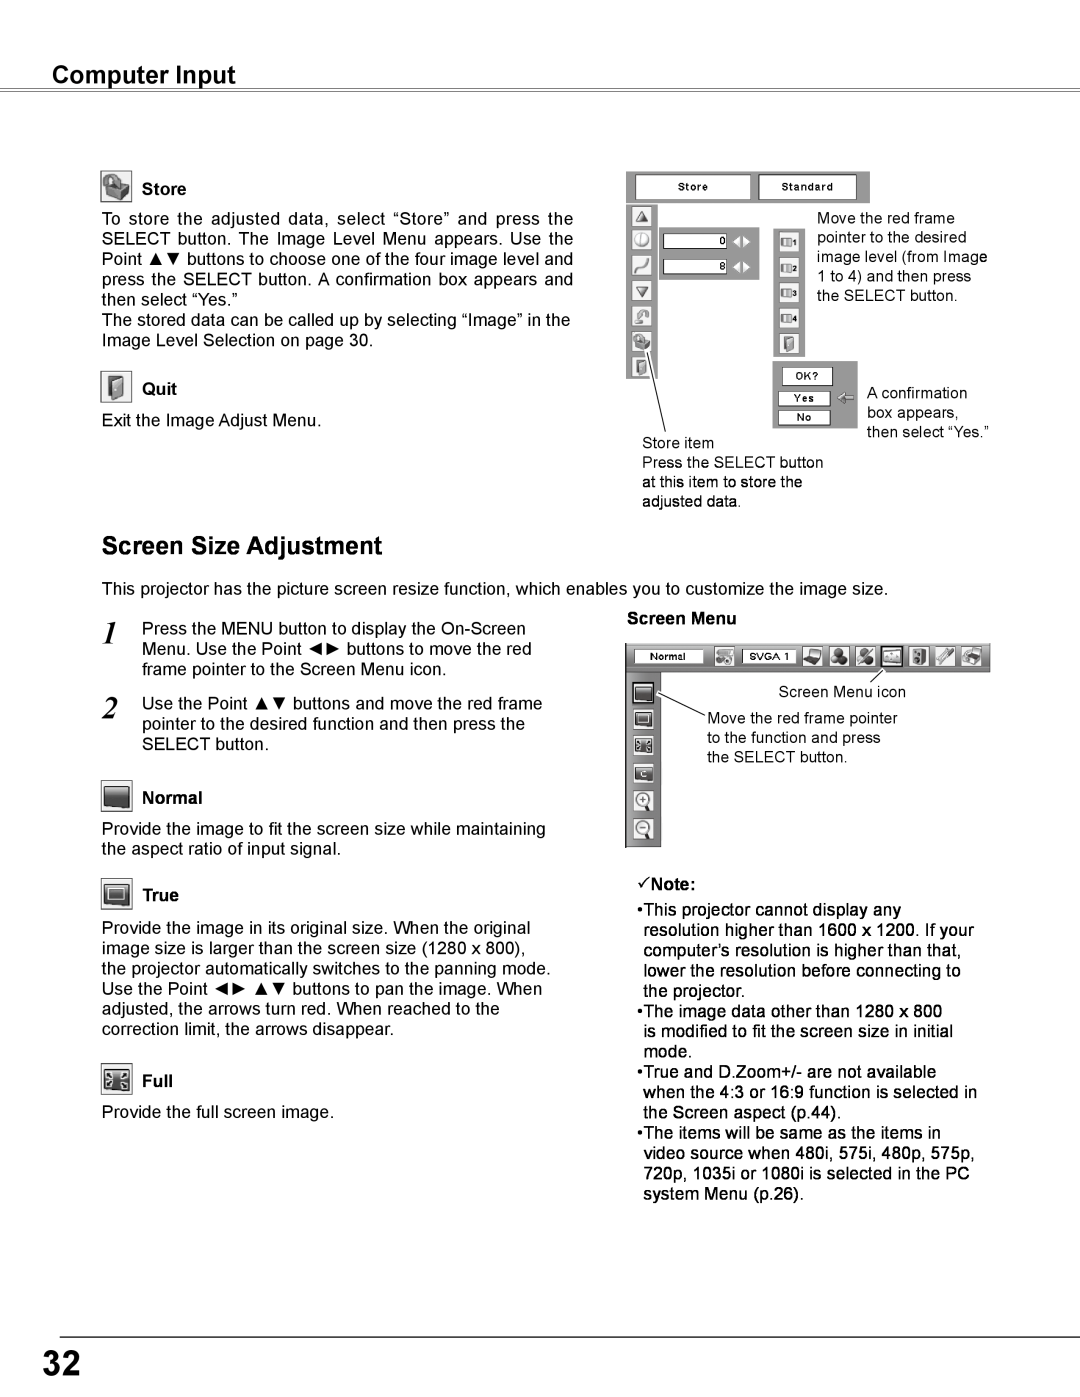 Sanyo PLC-WXE46 owner manual Screen Size Adjustment, Computer Input, Store, Quit, Normal, True, Full, Screen Menu, Note 